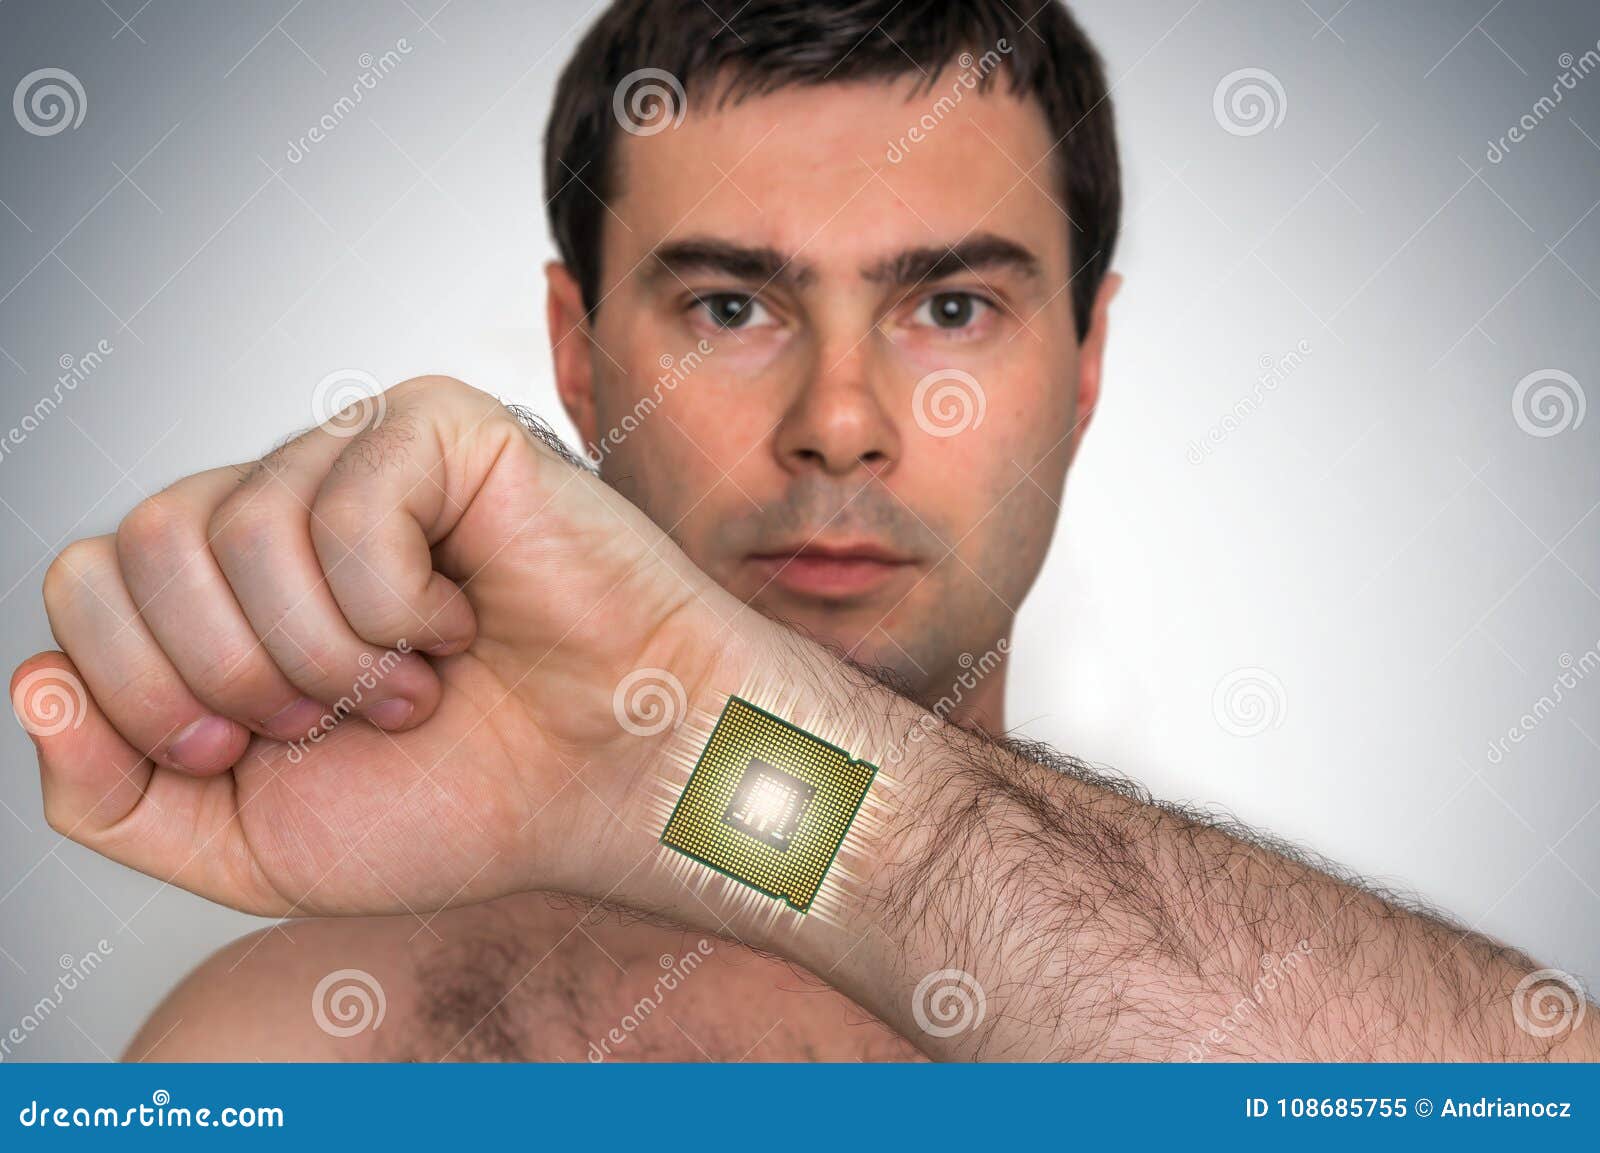 bionic microchip processor inside male human body